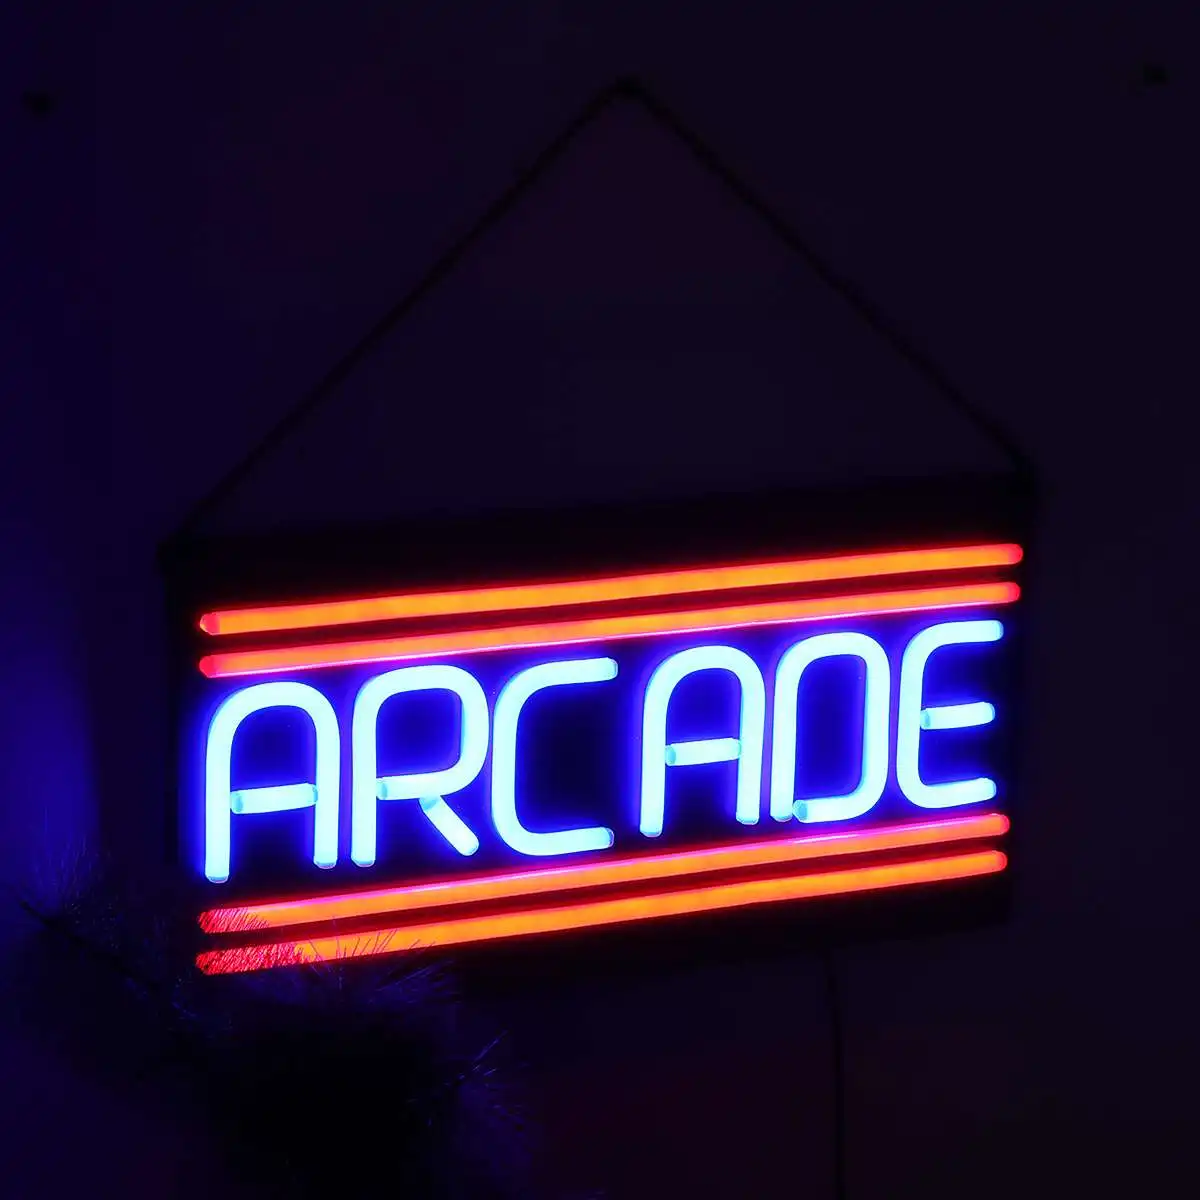 Arcade Shopping Center Shop LED Neon Light Sign Display Decor Signboard SALE!!! 